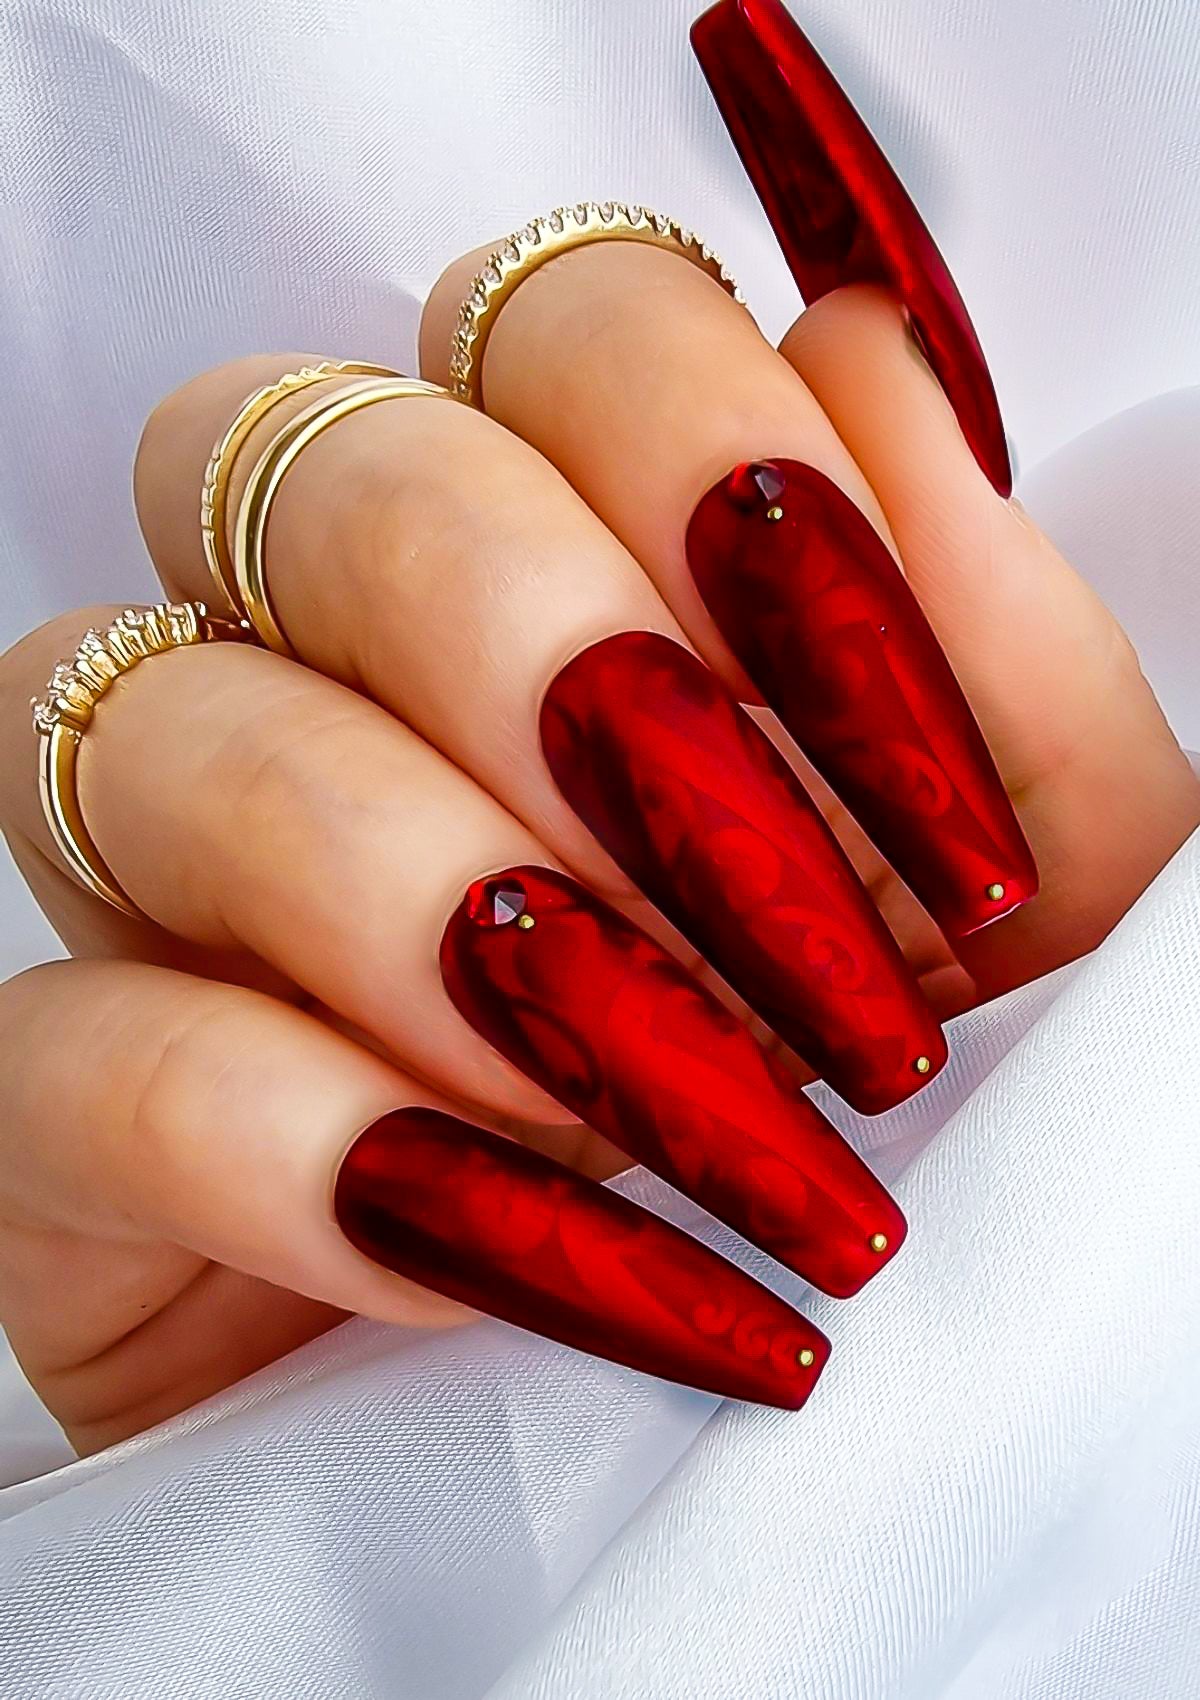 Red Maori nails 